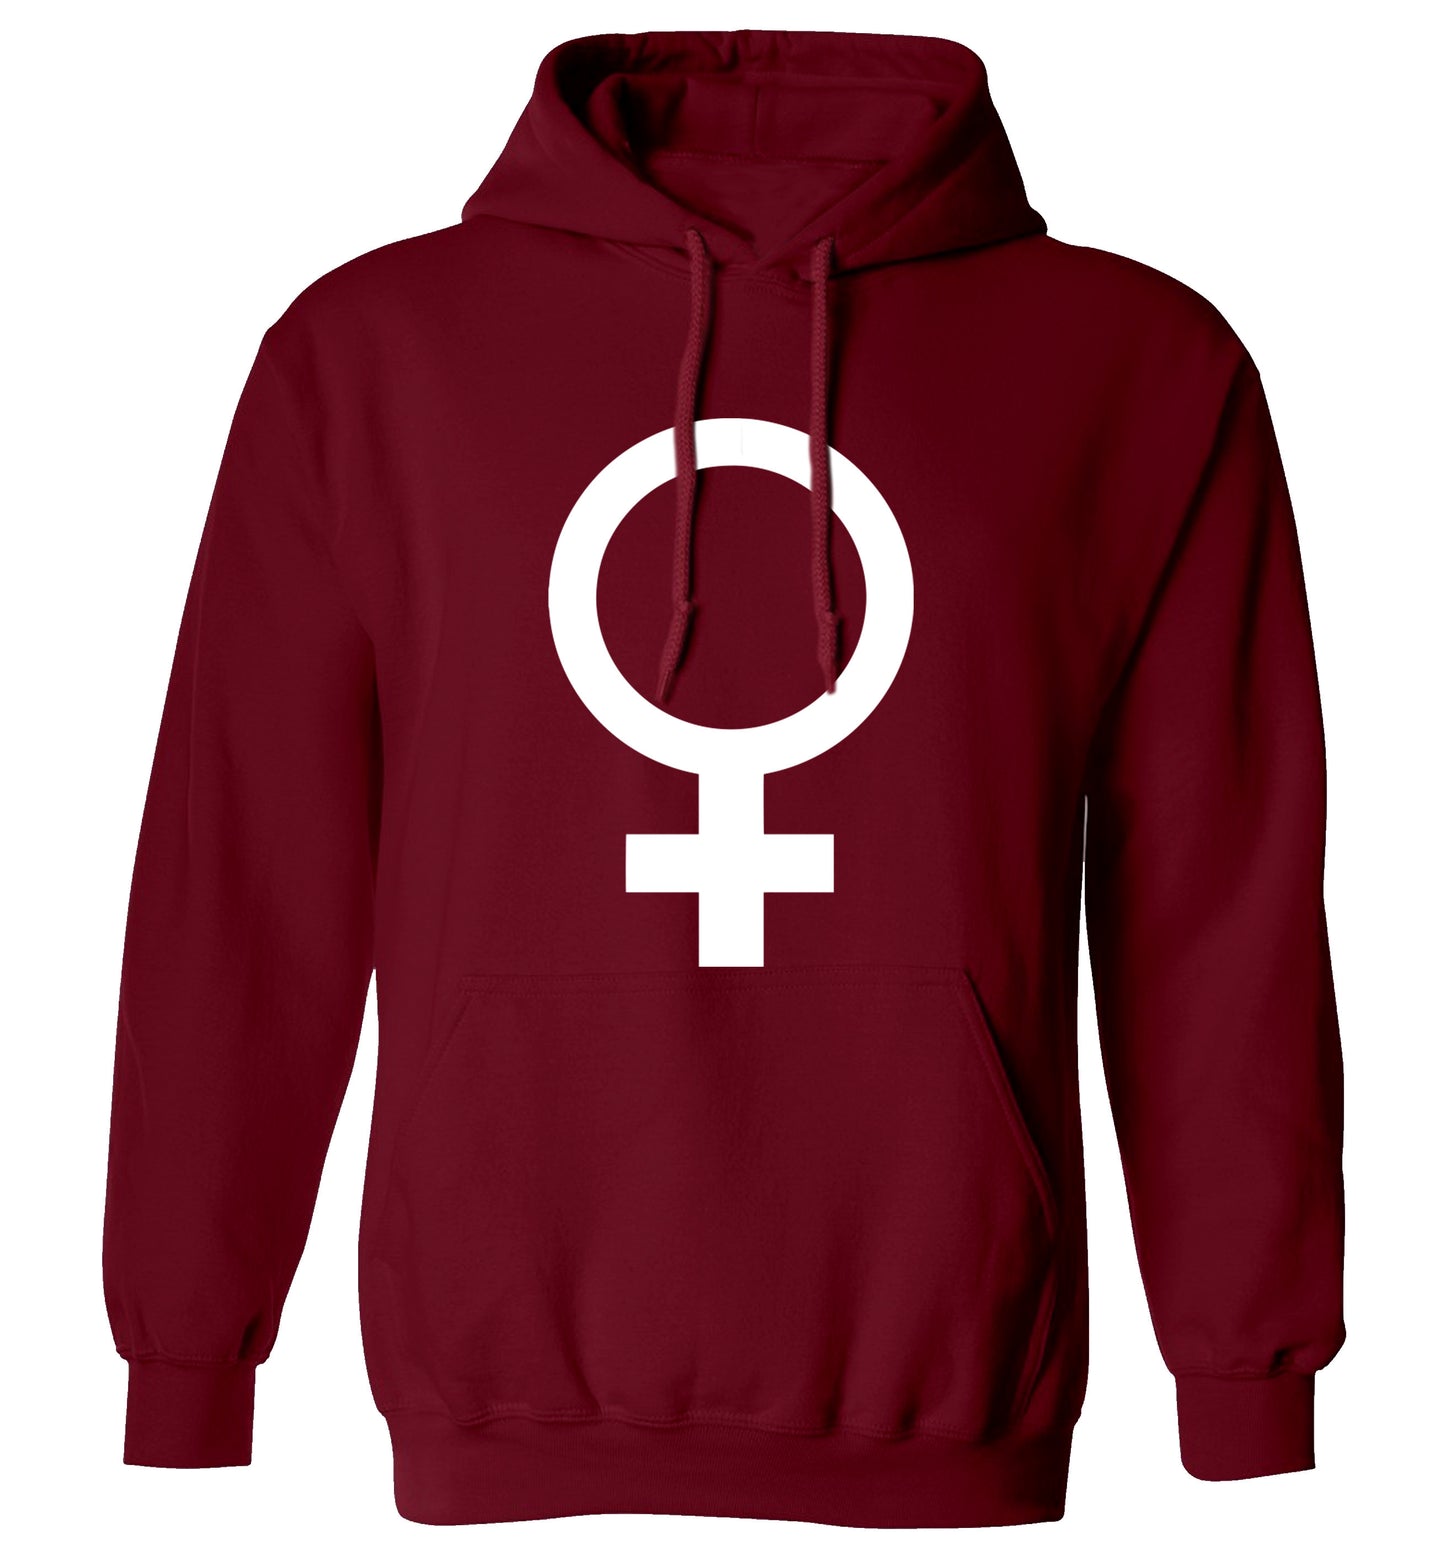 Female symbol large adults unisex maroon hoodie 2XL